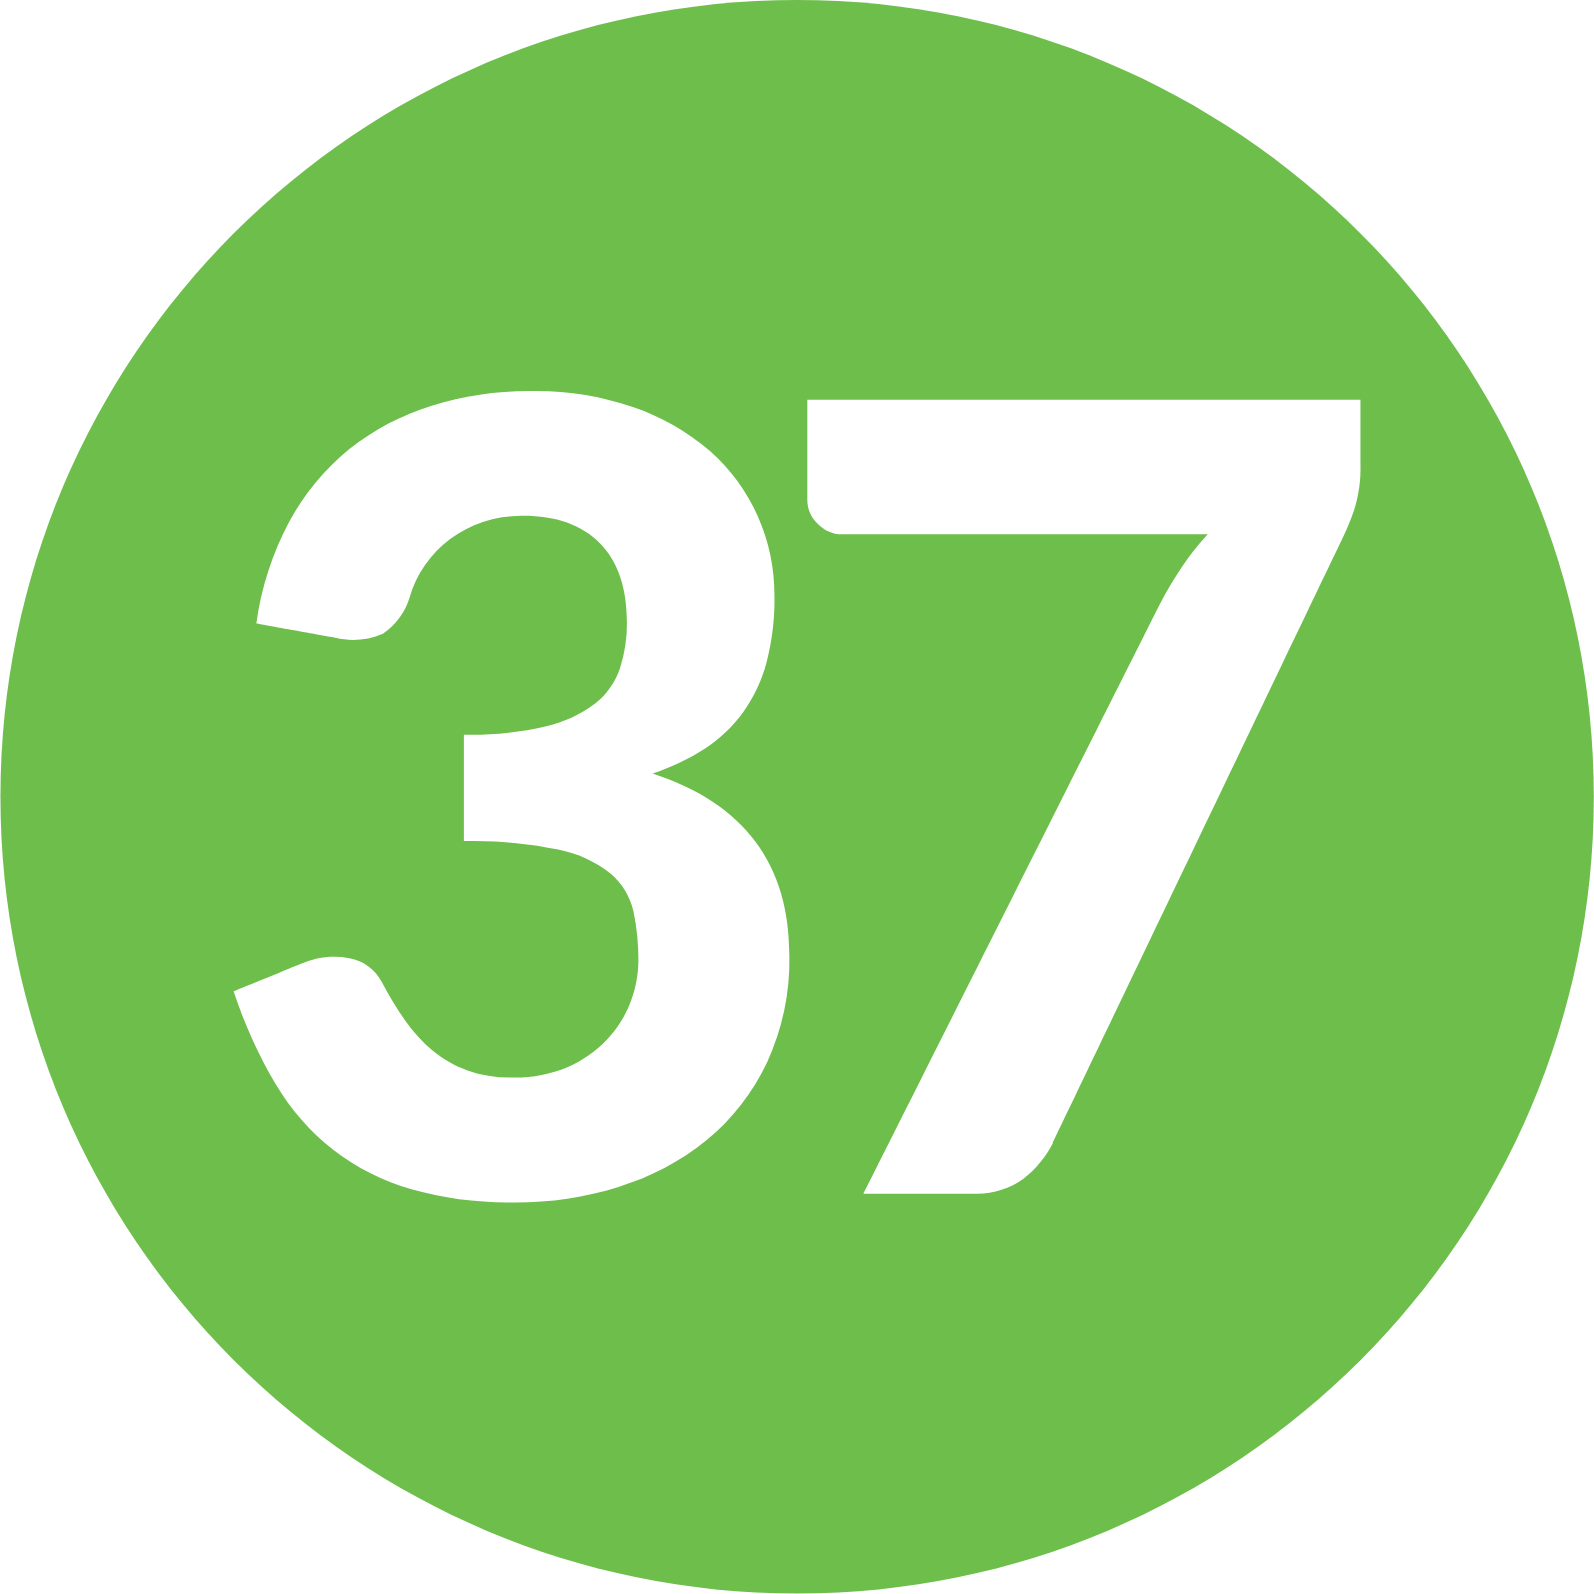 Science 37 logo (transparent PNG)